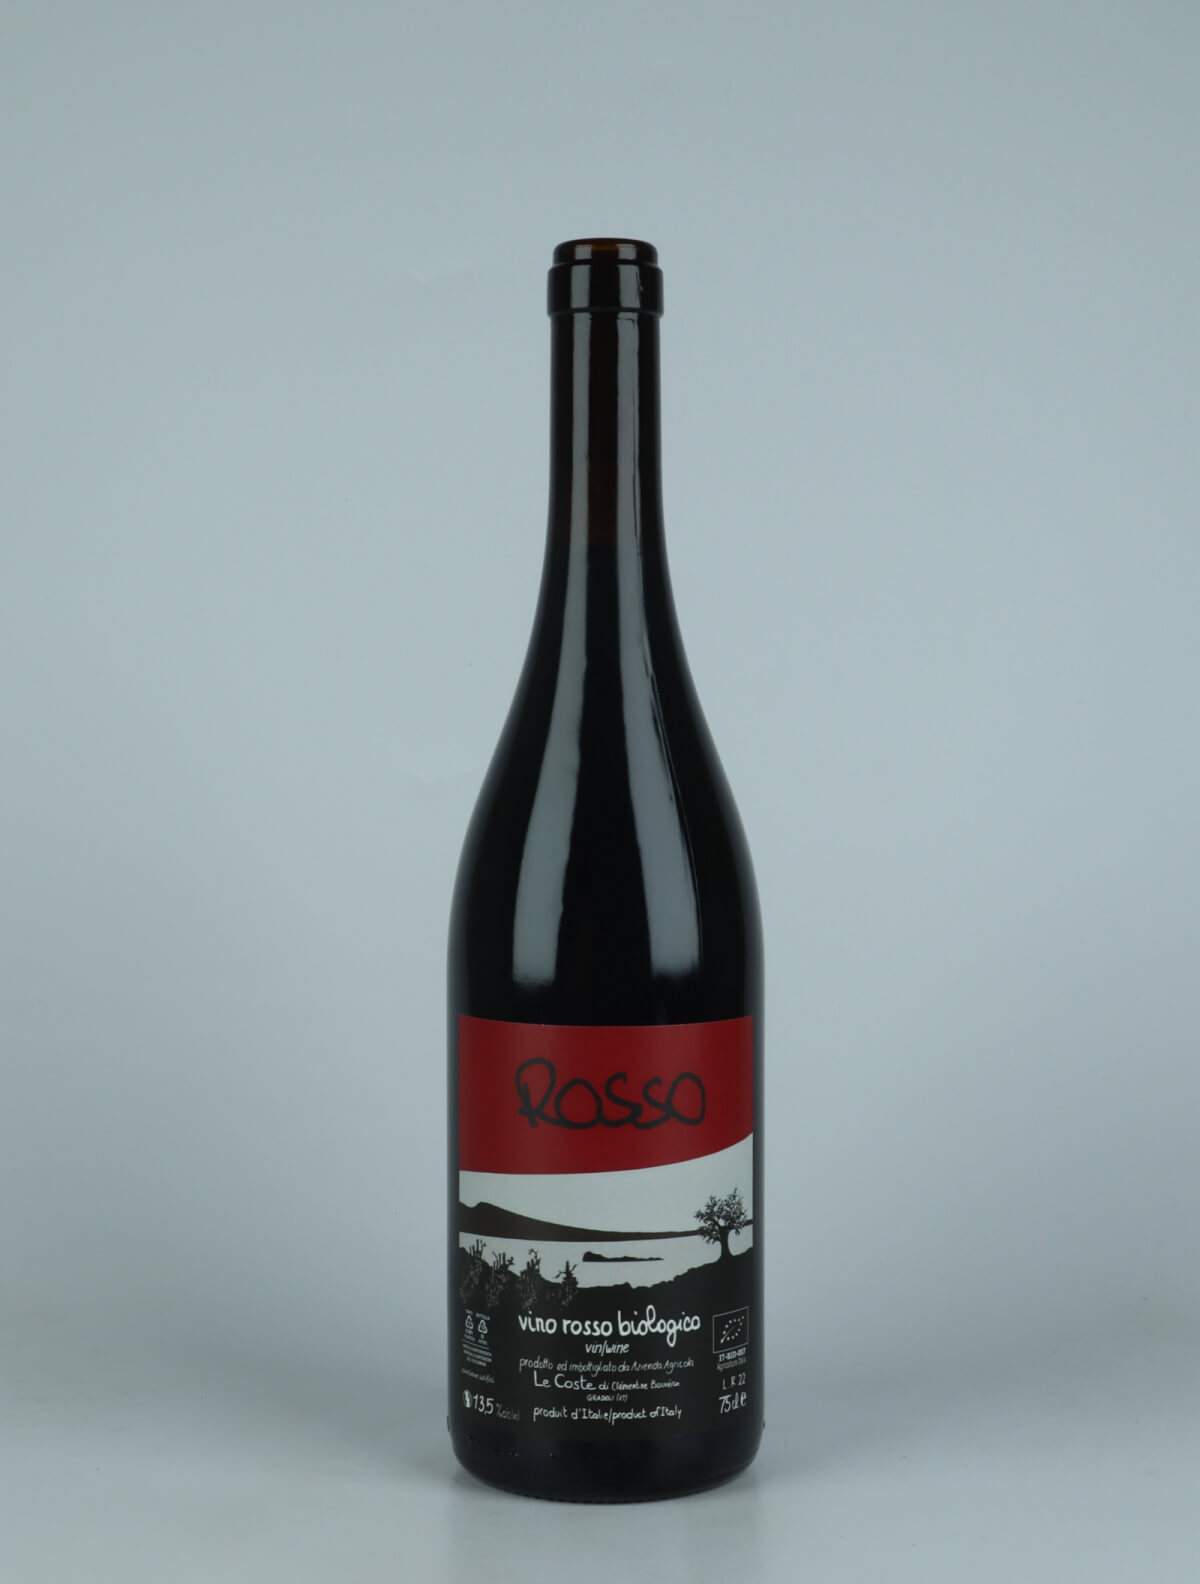 En flaske 2022 Rosso Rødvin fra Le Coste, Lazio i Italien